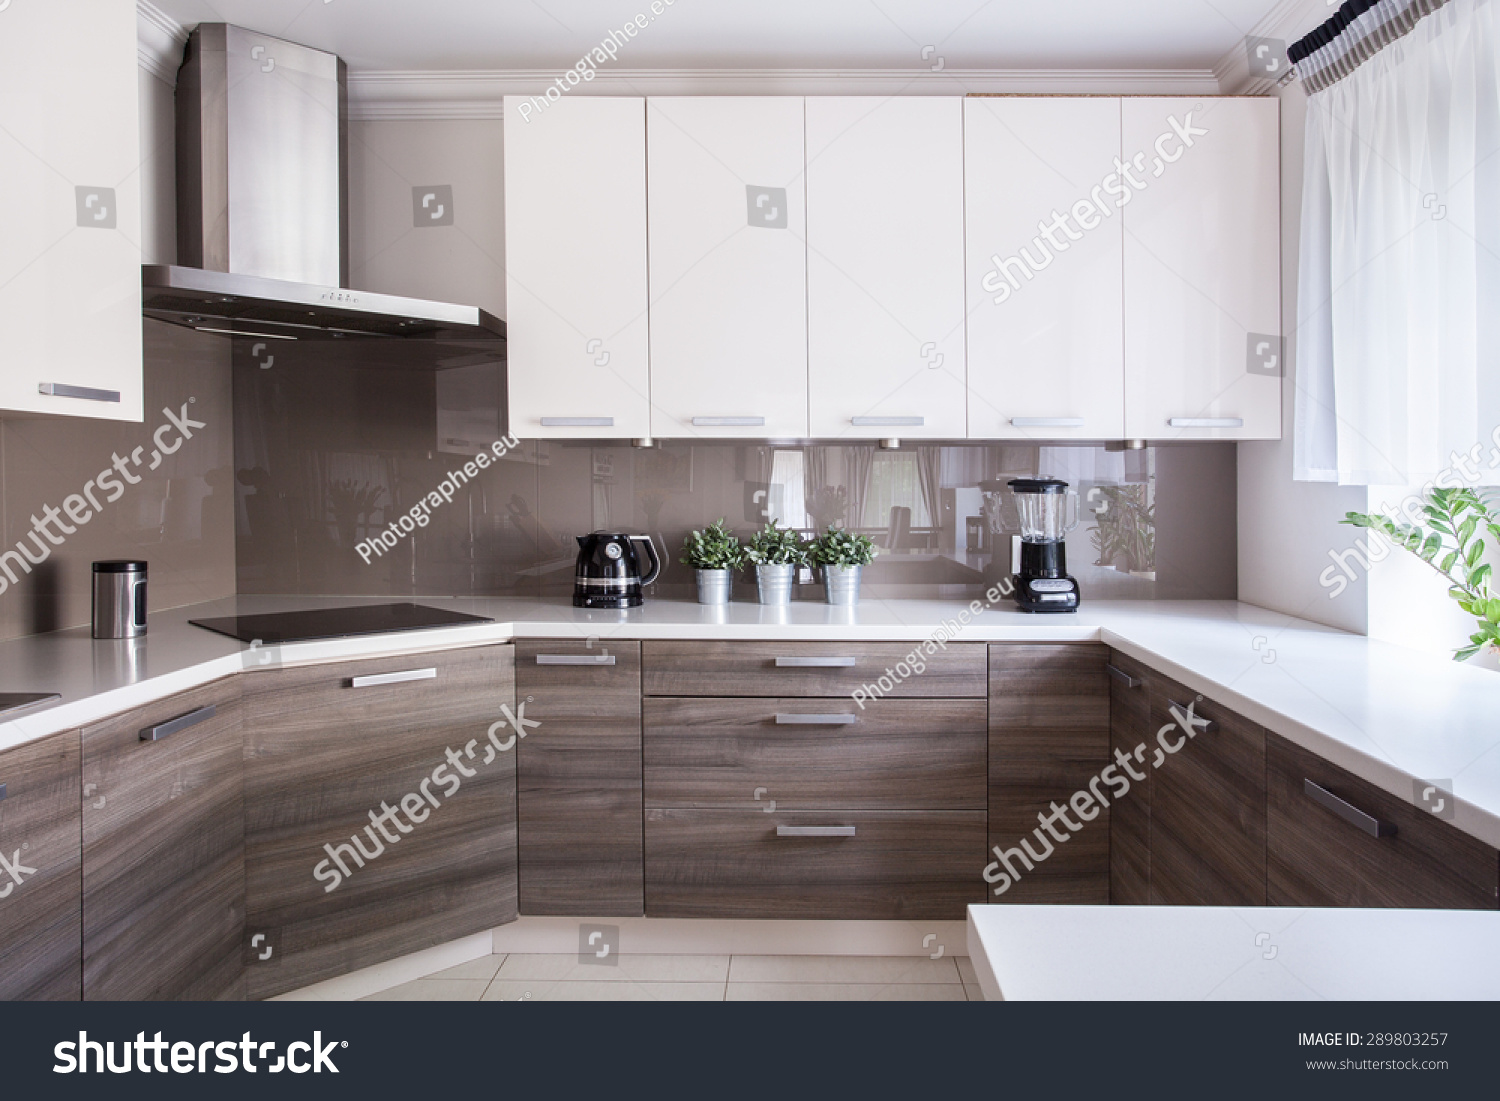 stock-photo-cozy-beige-kitchen-interior-with-wooden-cupboards-289803257.jpg